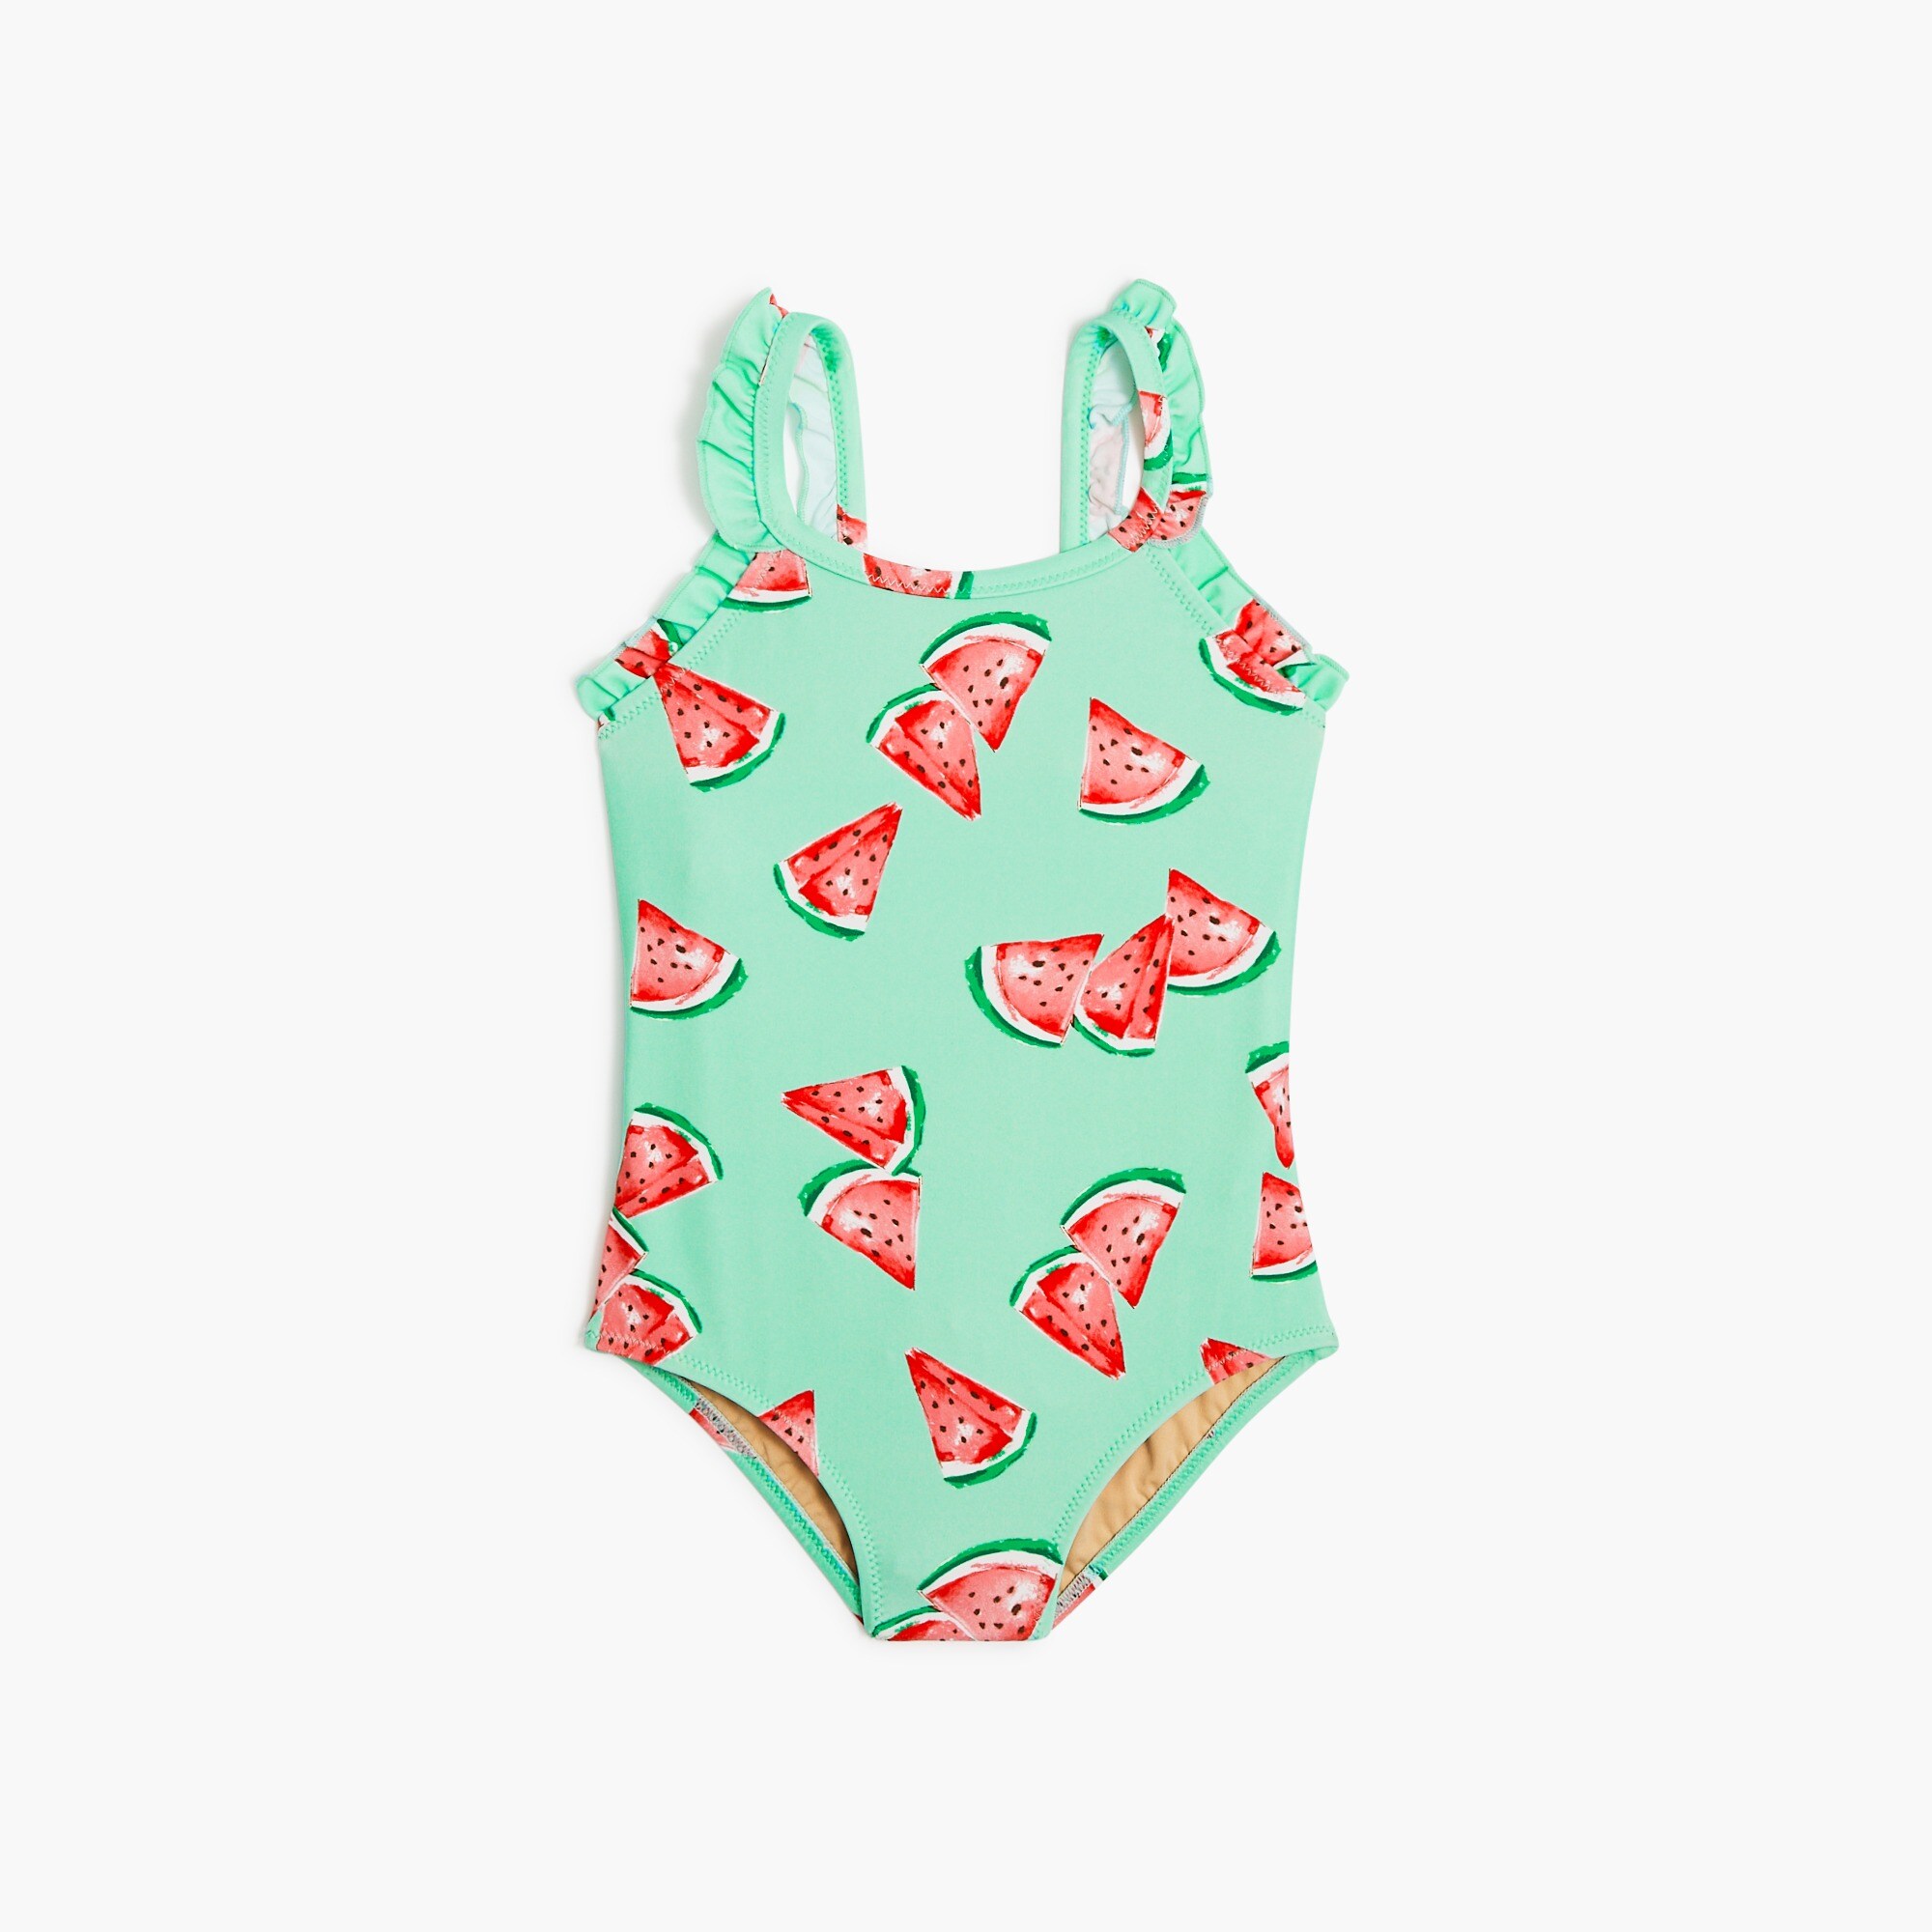  Girls' watermelon ruffle one-piece swimsuit